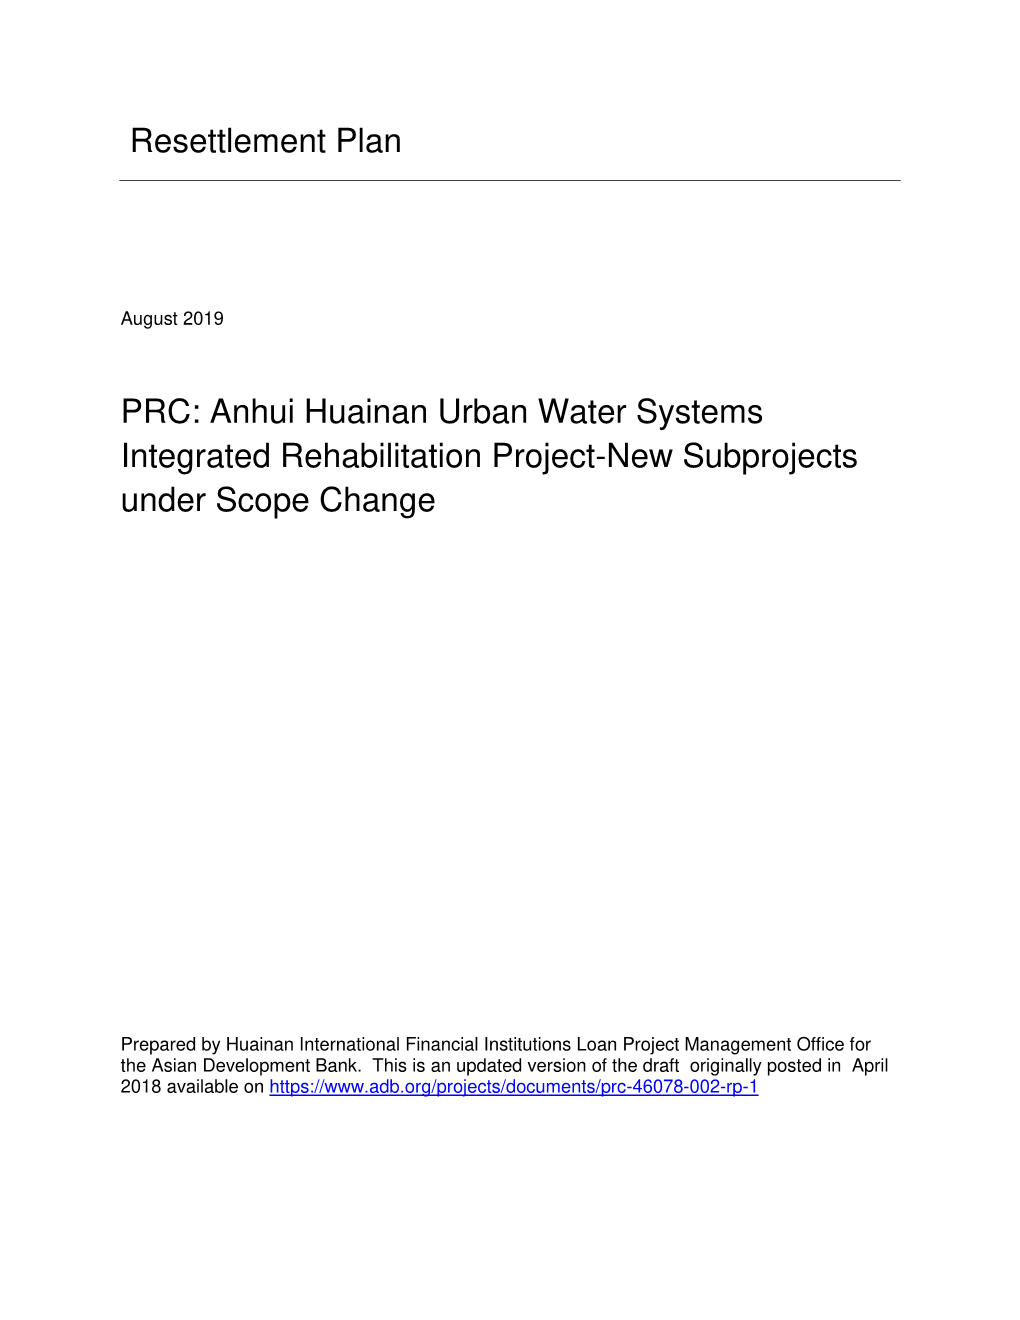 46078-002: Anhui Huainan Urban Water Systems Integrated